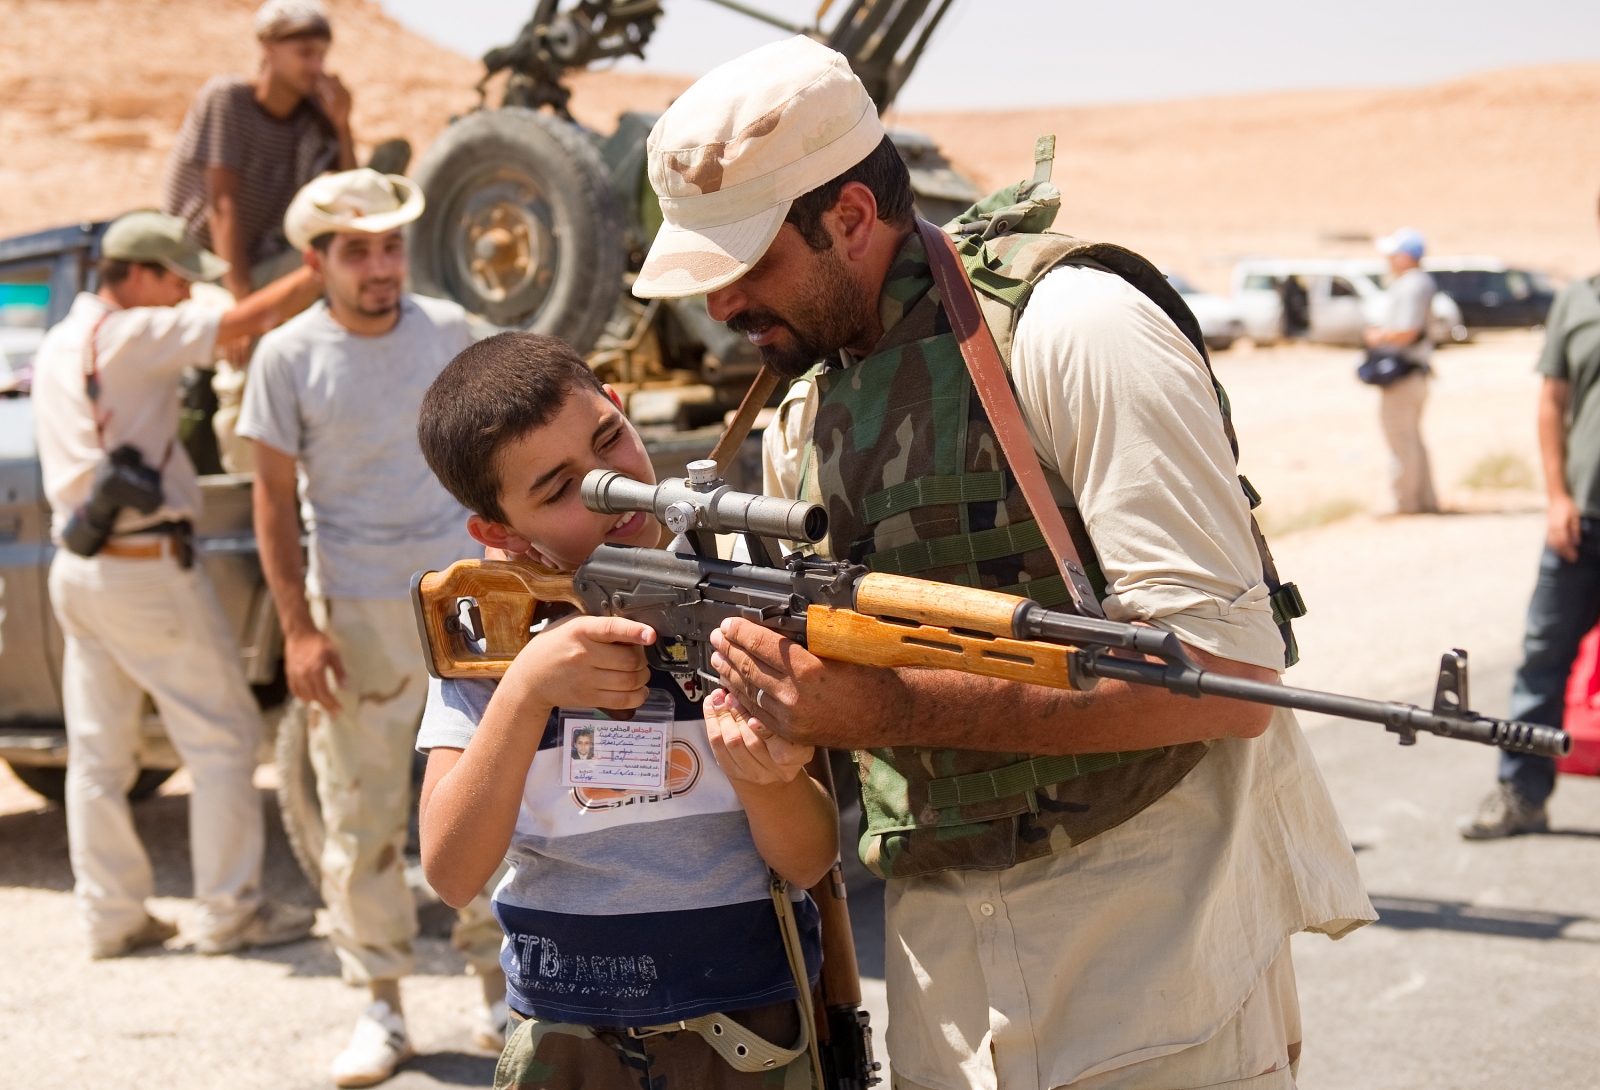 An anti-Gaddafi militant allows a boy to look through the telescopic target of his rifle near Beni Malid in 2011. (Getty)